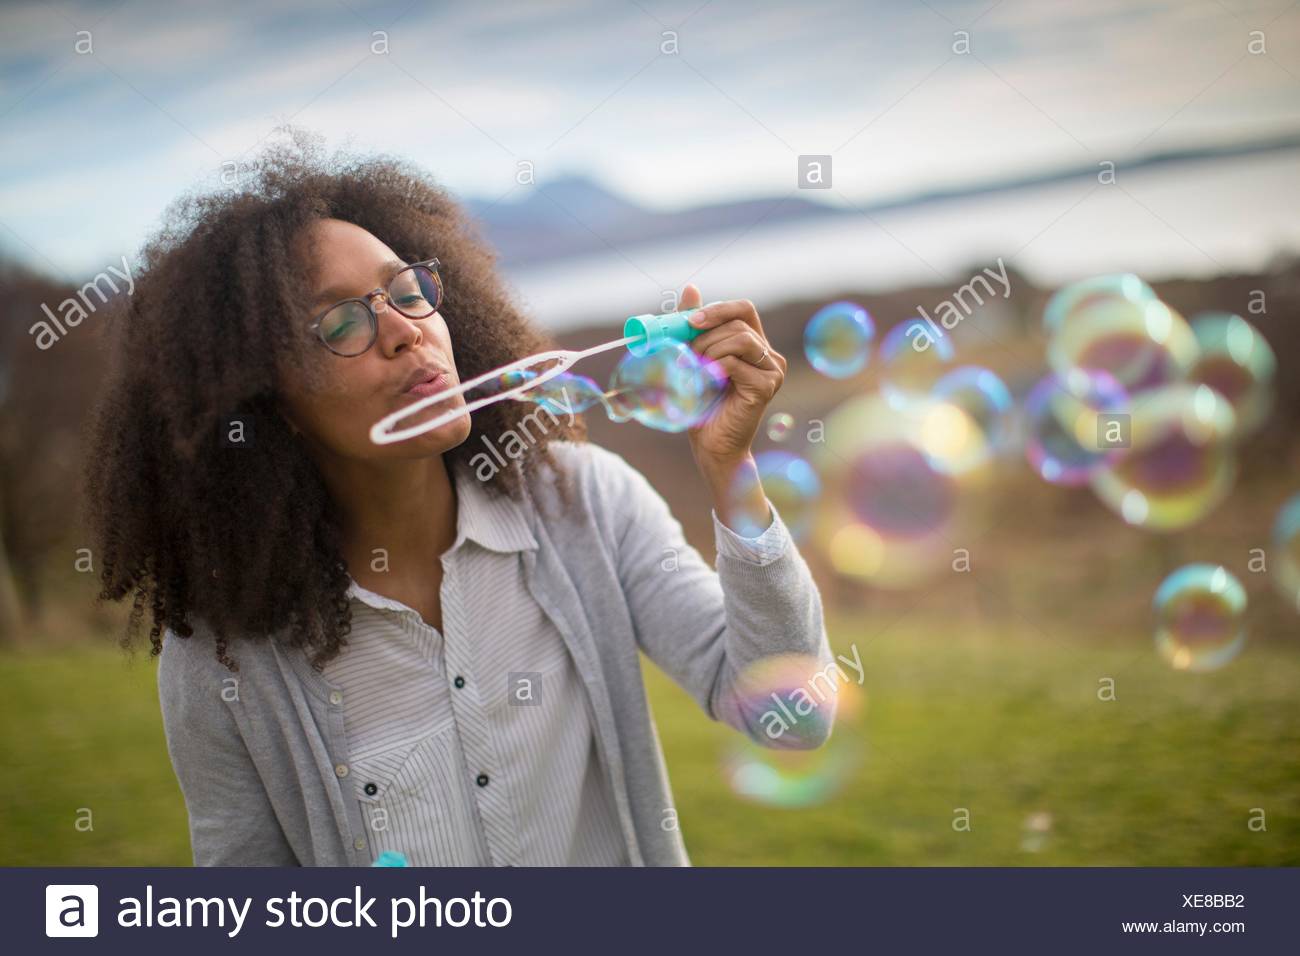 Woman Blowing Bubbles Images